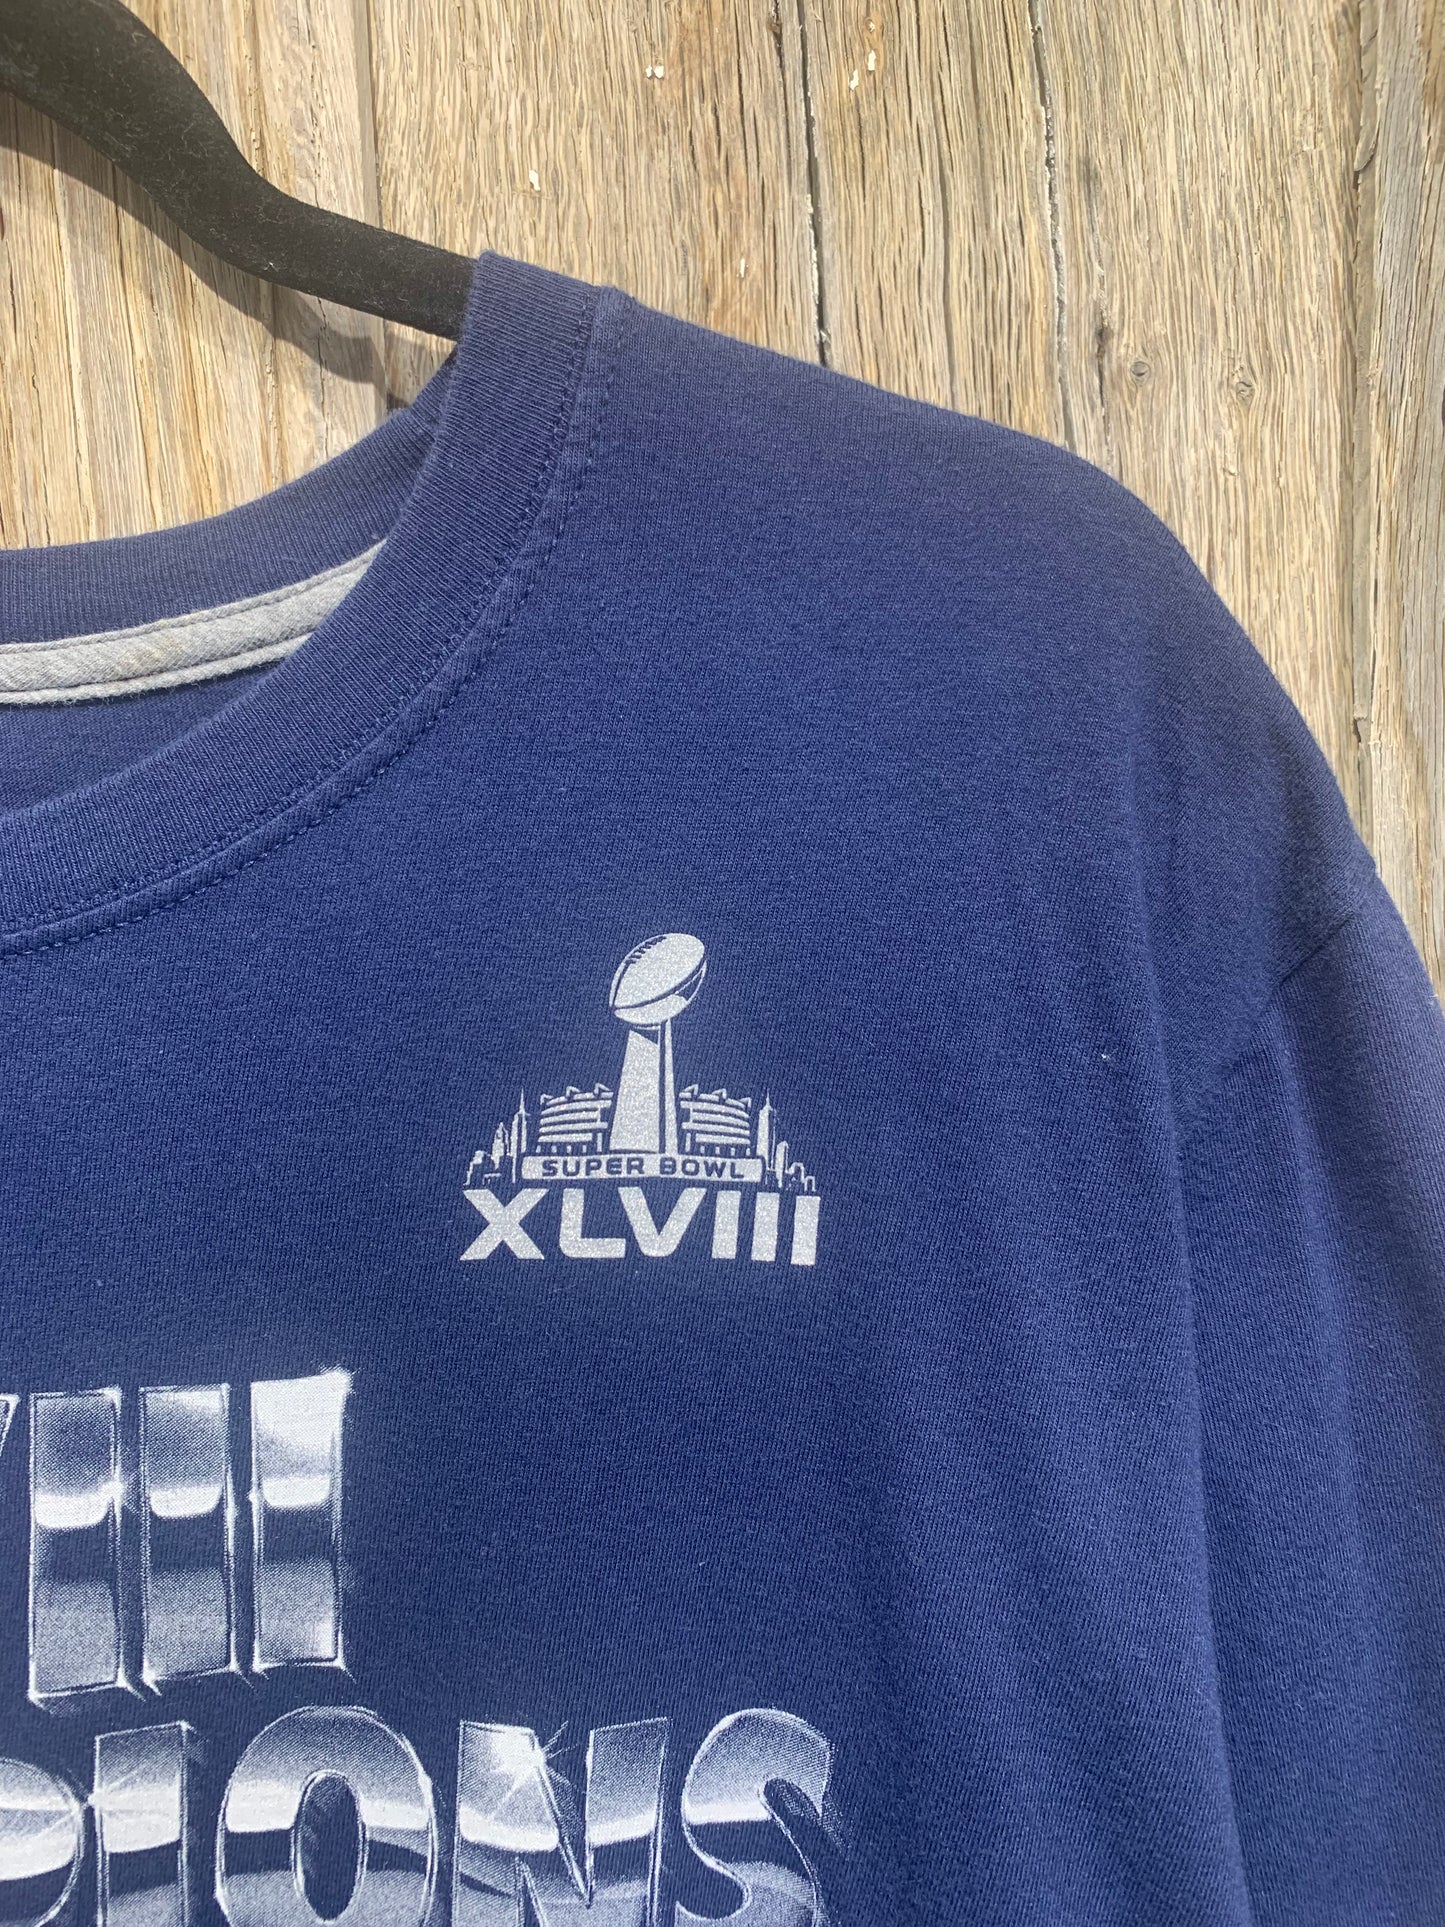 Vintage Seattle Seahawks NFL Super Bowl Championship T